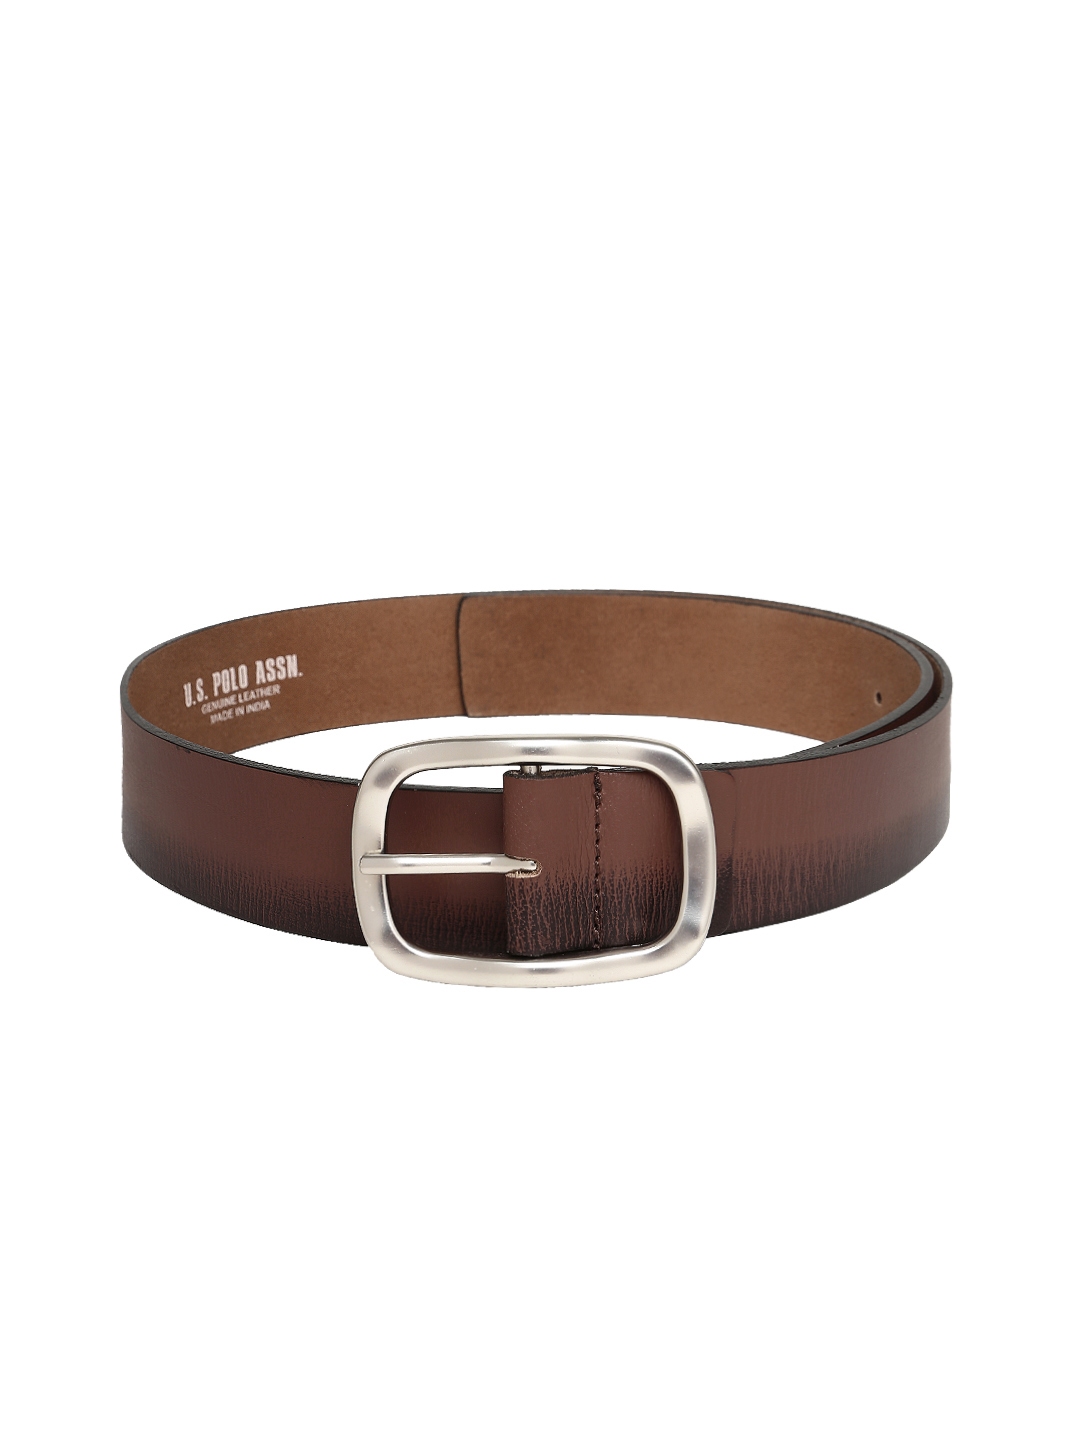 Buy U.S. Polo Assn. Men Brown Leather Belt - Belts for Men 783952 | Myntra